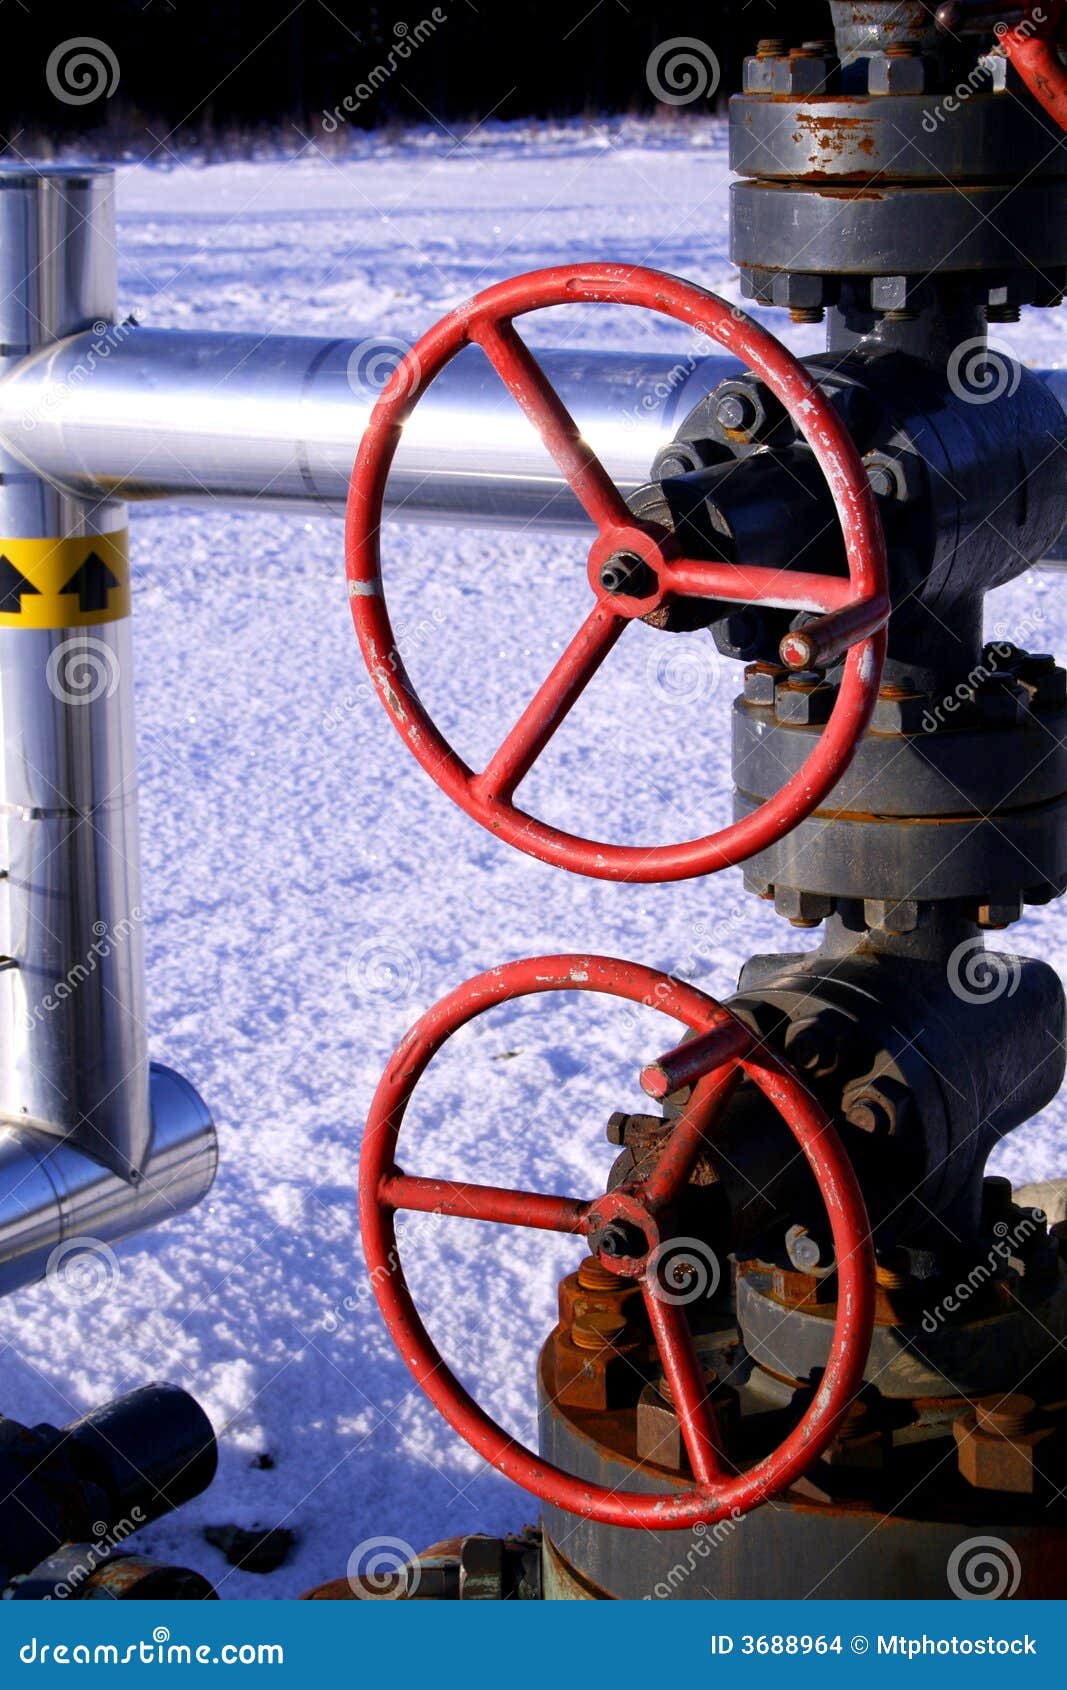 red valve handles